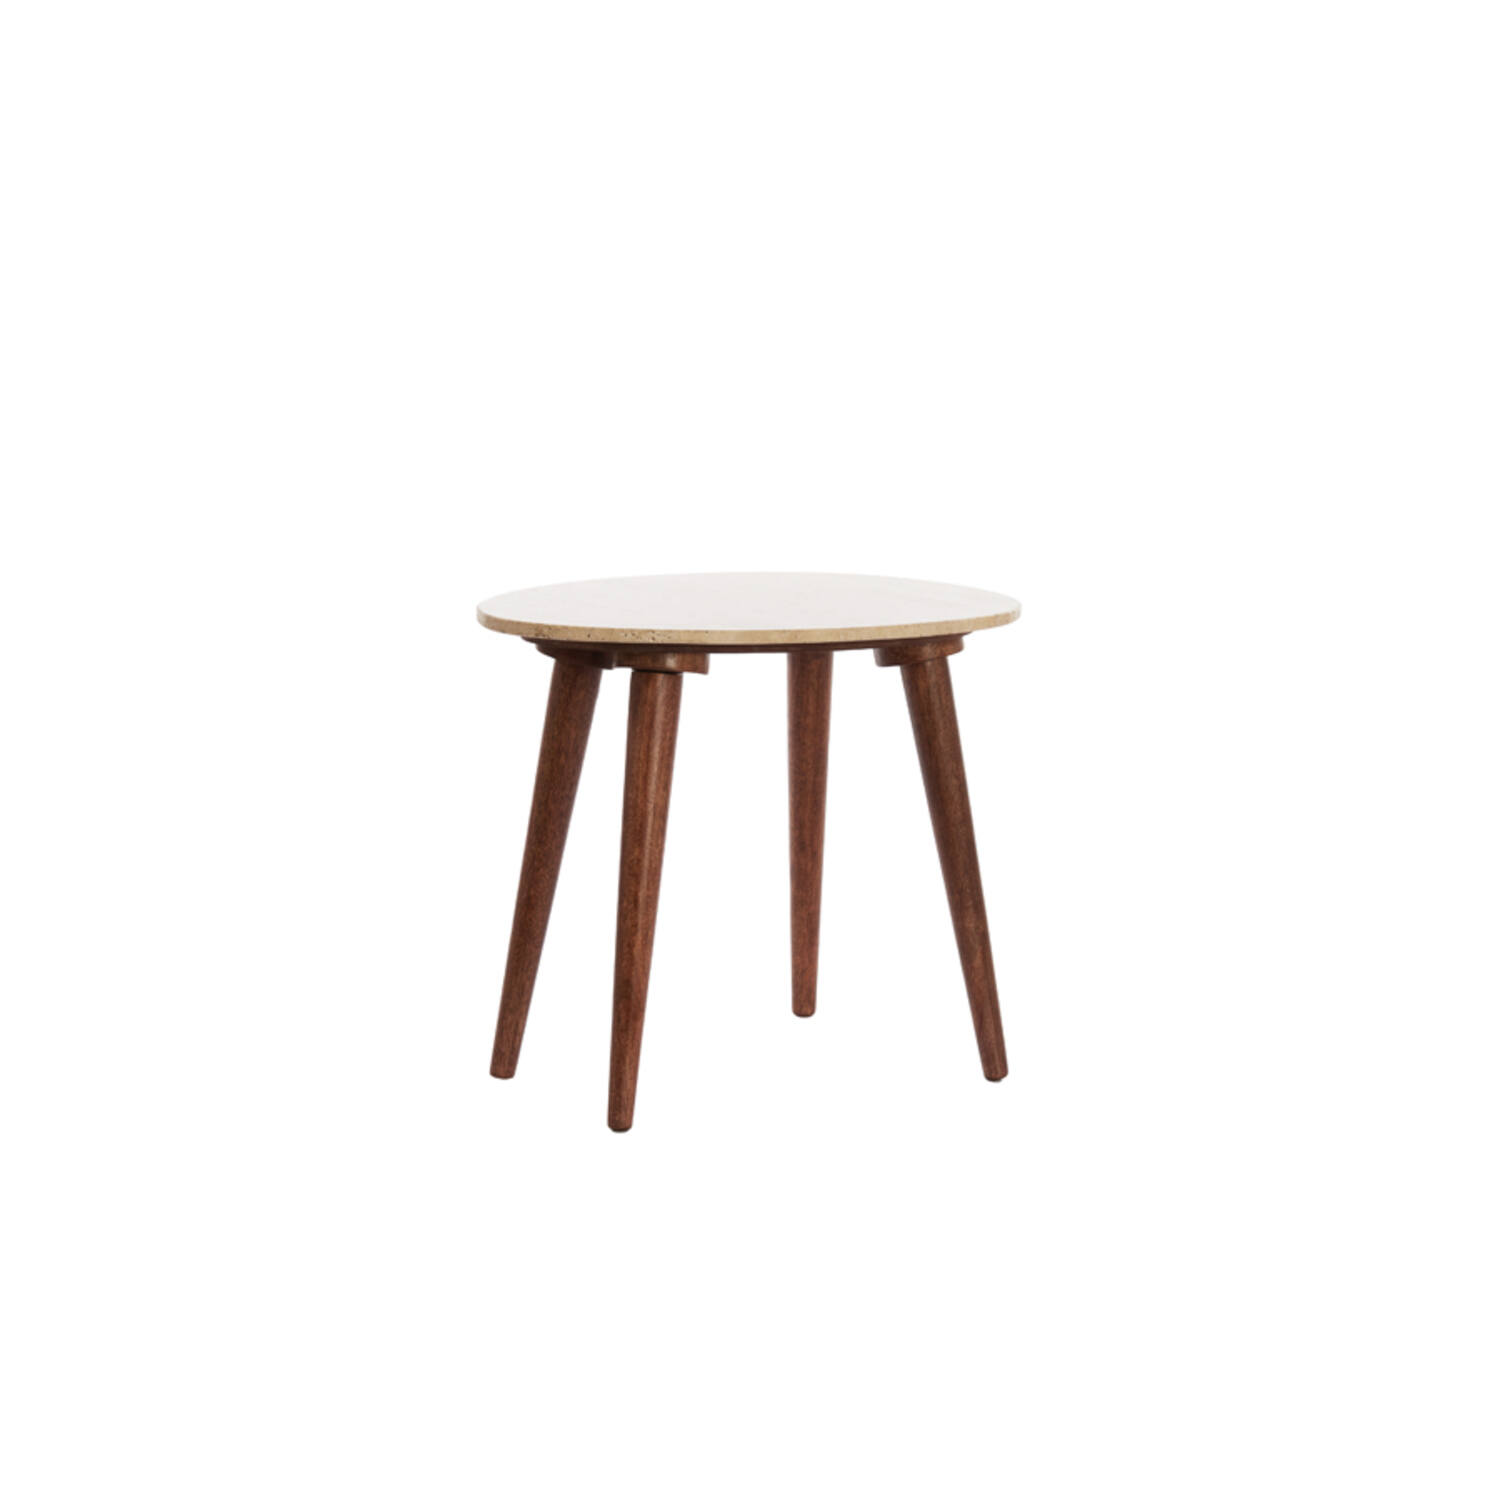 Coffee table 51x40x39 cm ROMANO travertine sand+wood brown